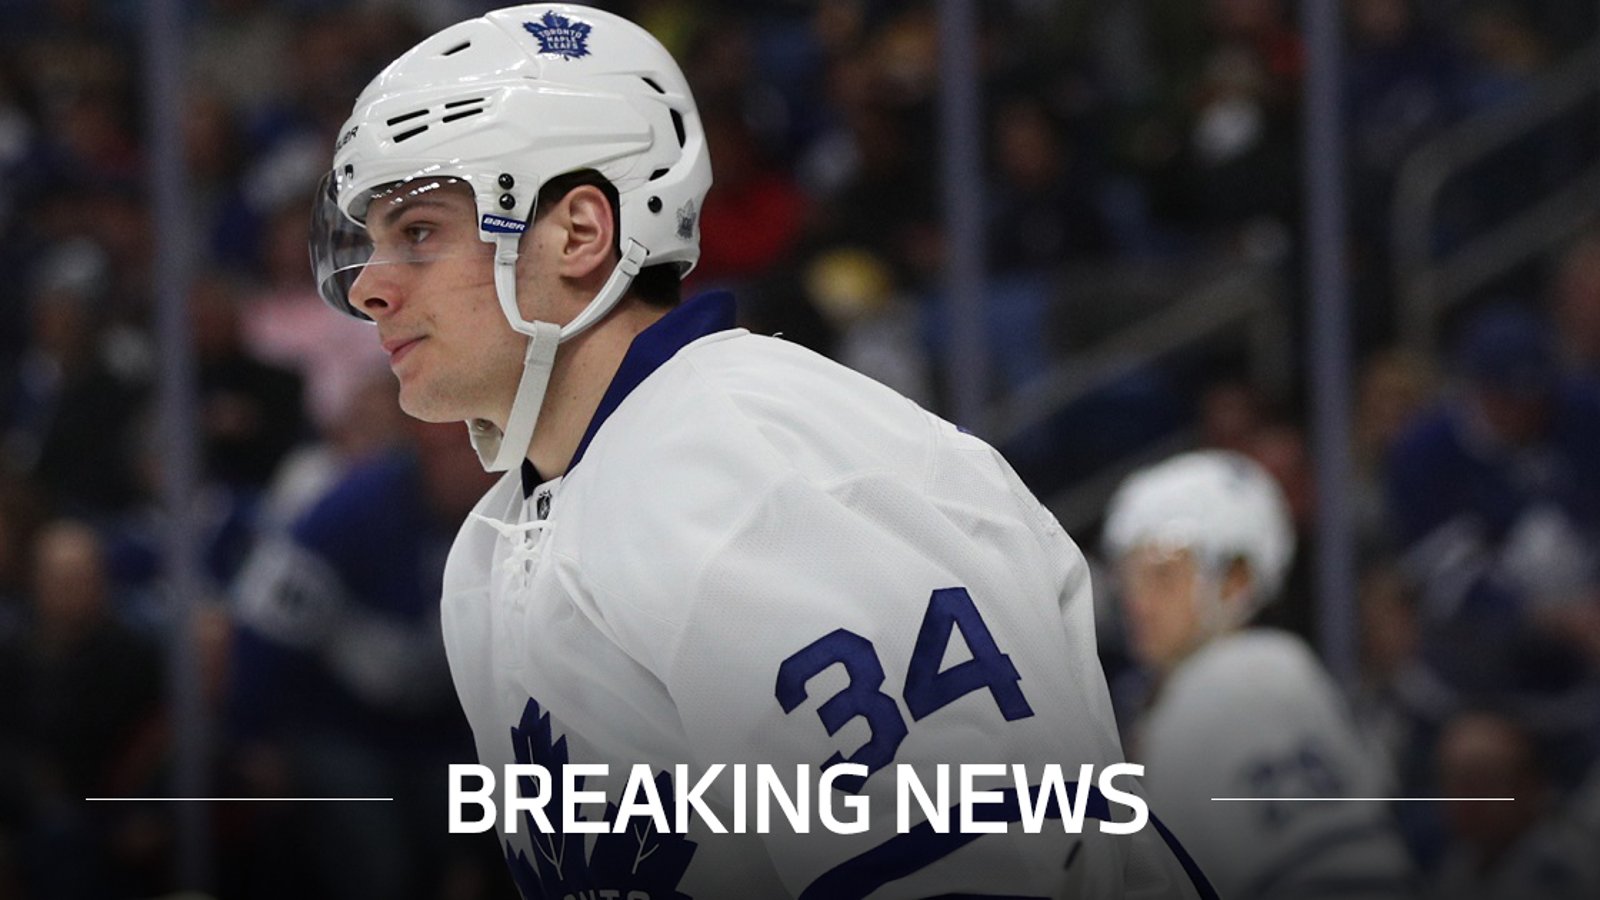 Breaking: More bad news for Maple Leafs superstar Auston Matthews,